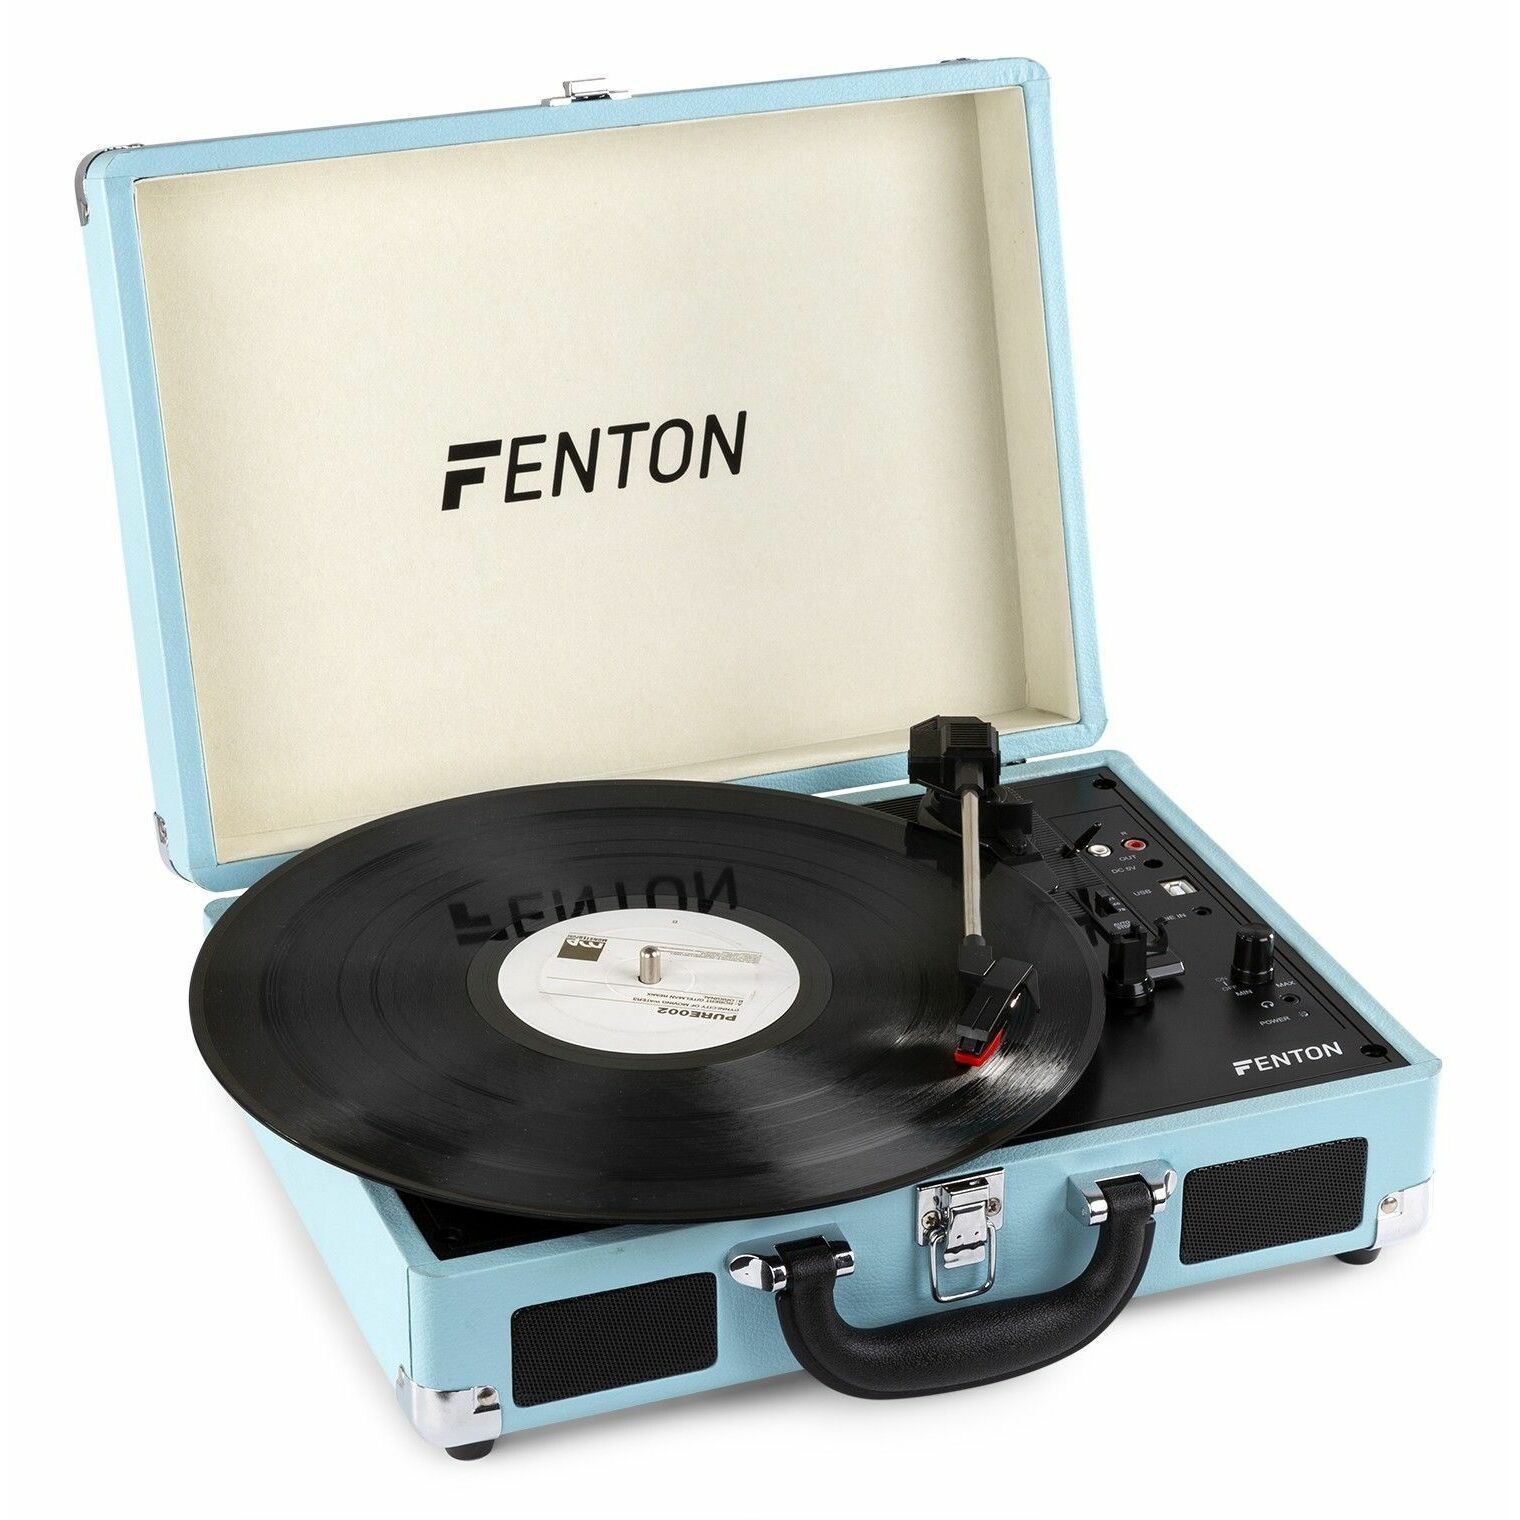 Fenton RP115 retro platenspeler met Bluetooth en USB - blauw